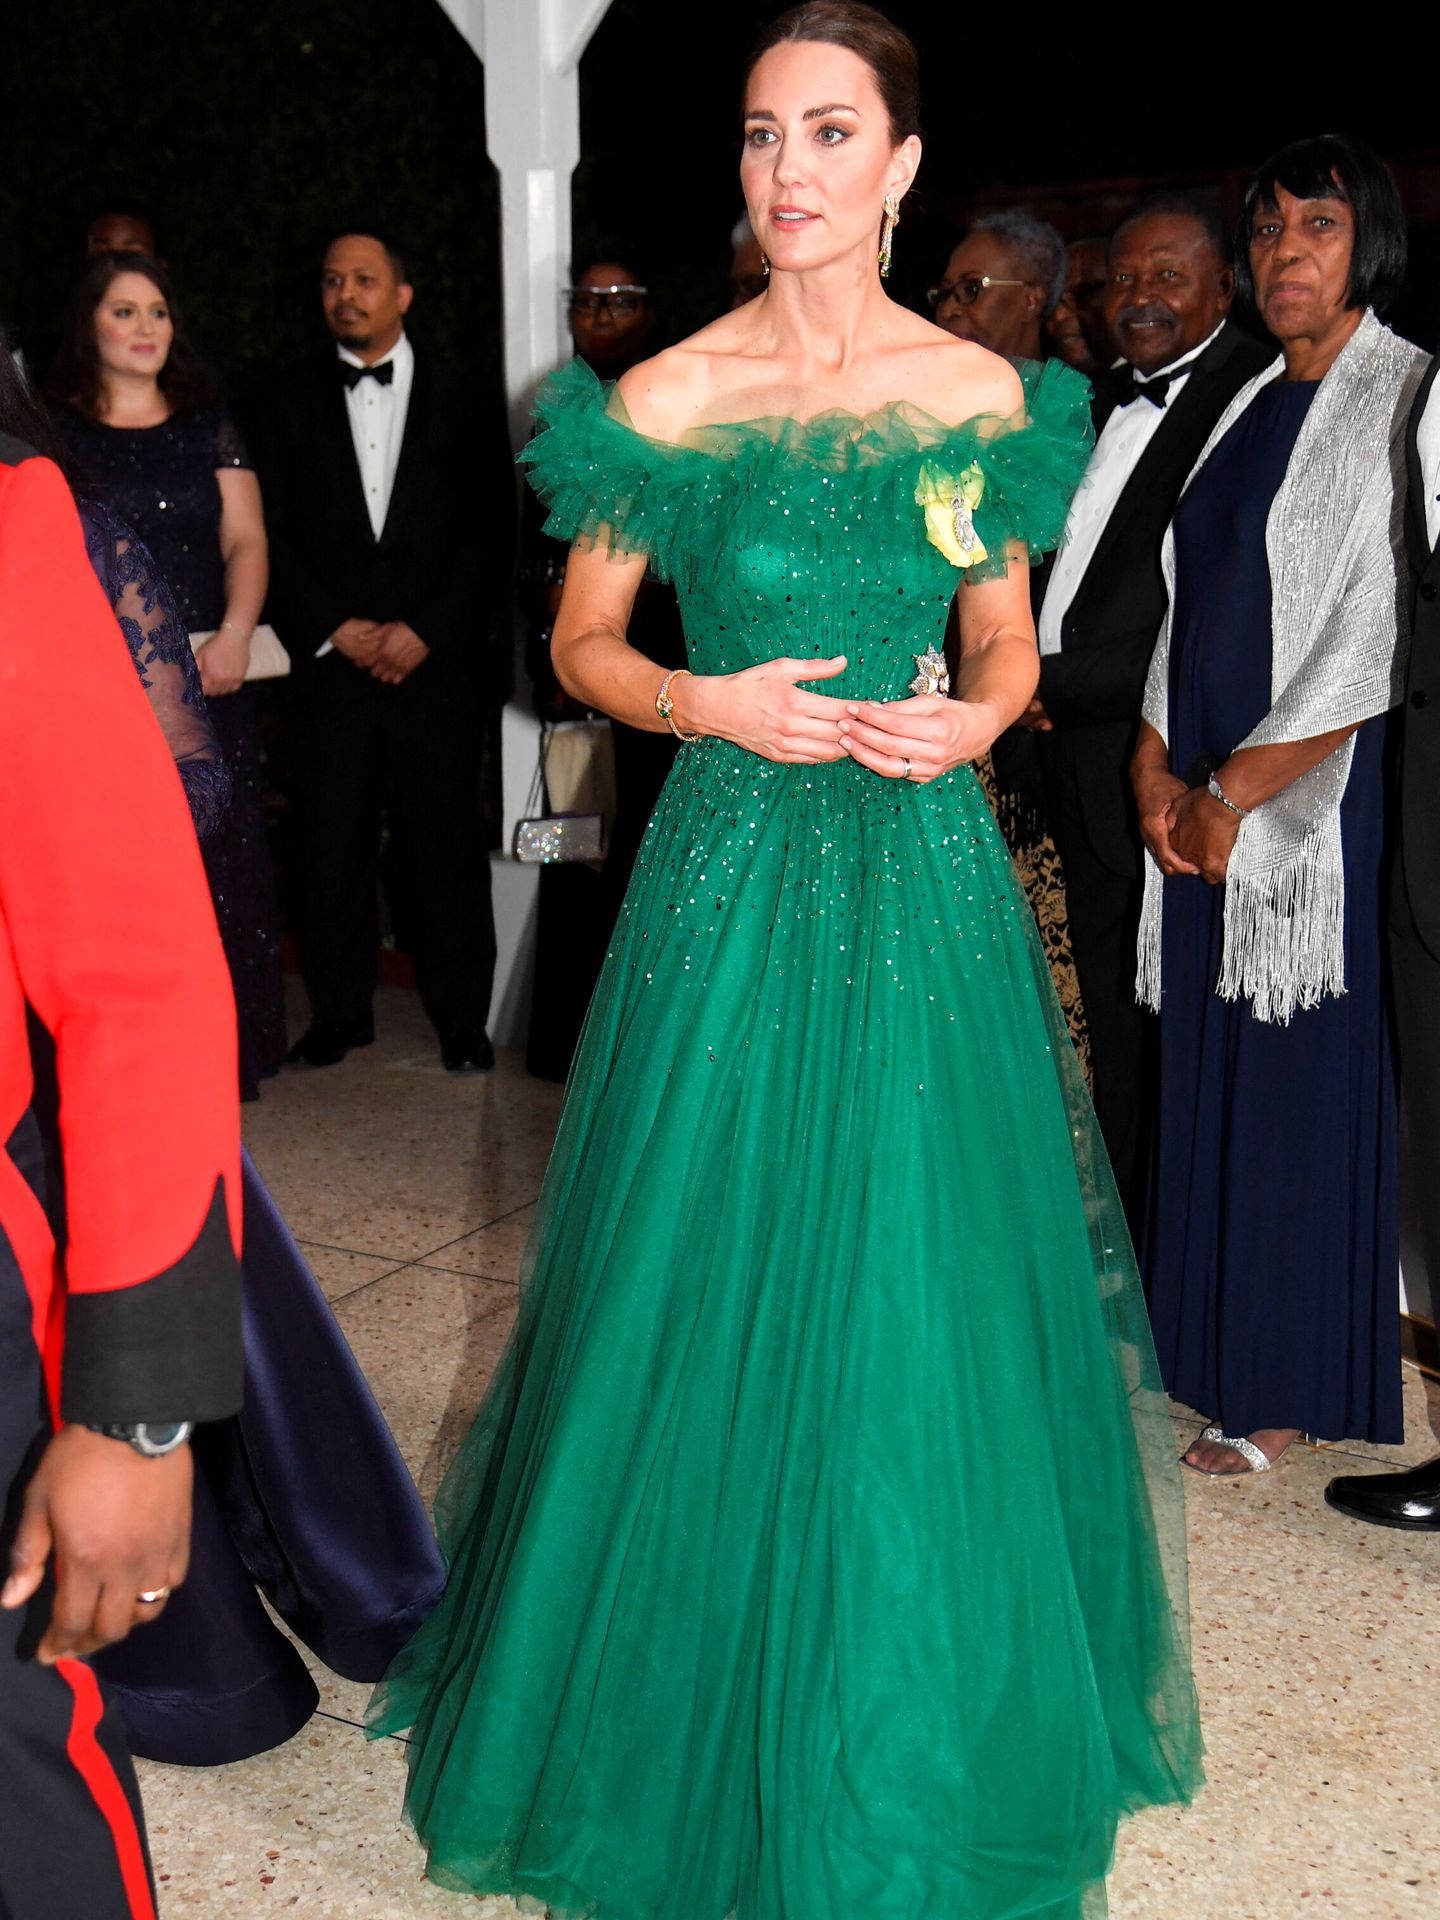 Detalle del vestido de la duquesa. (Reuters/Toby Melville)